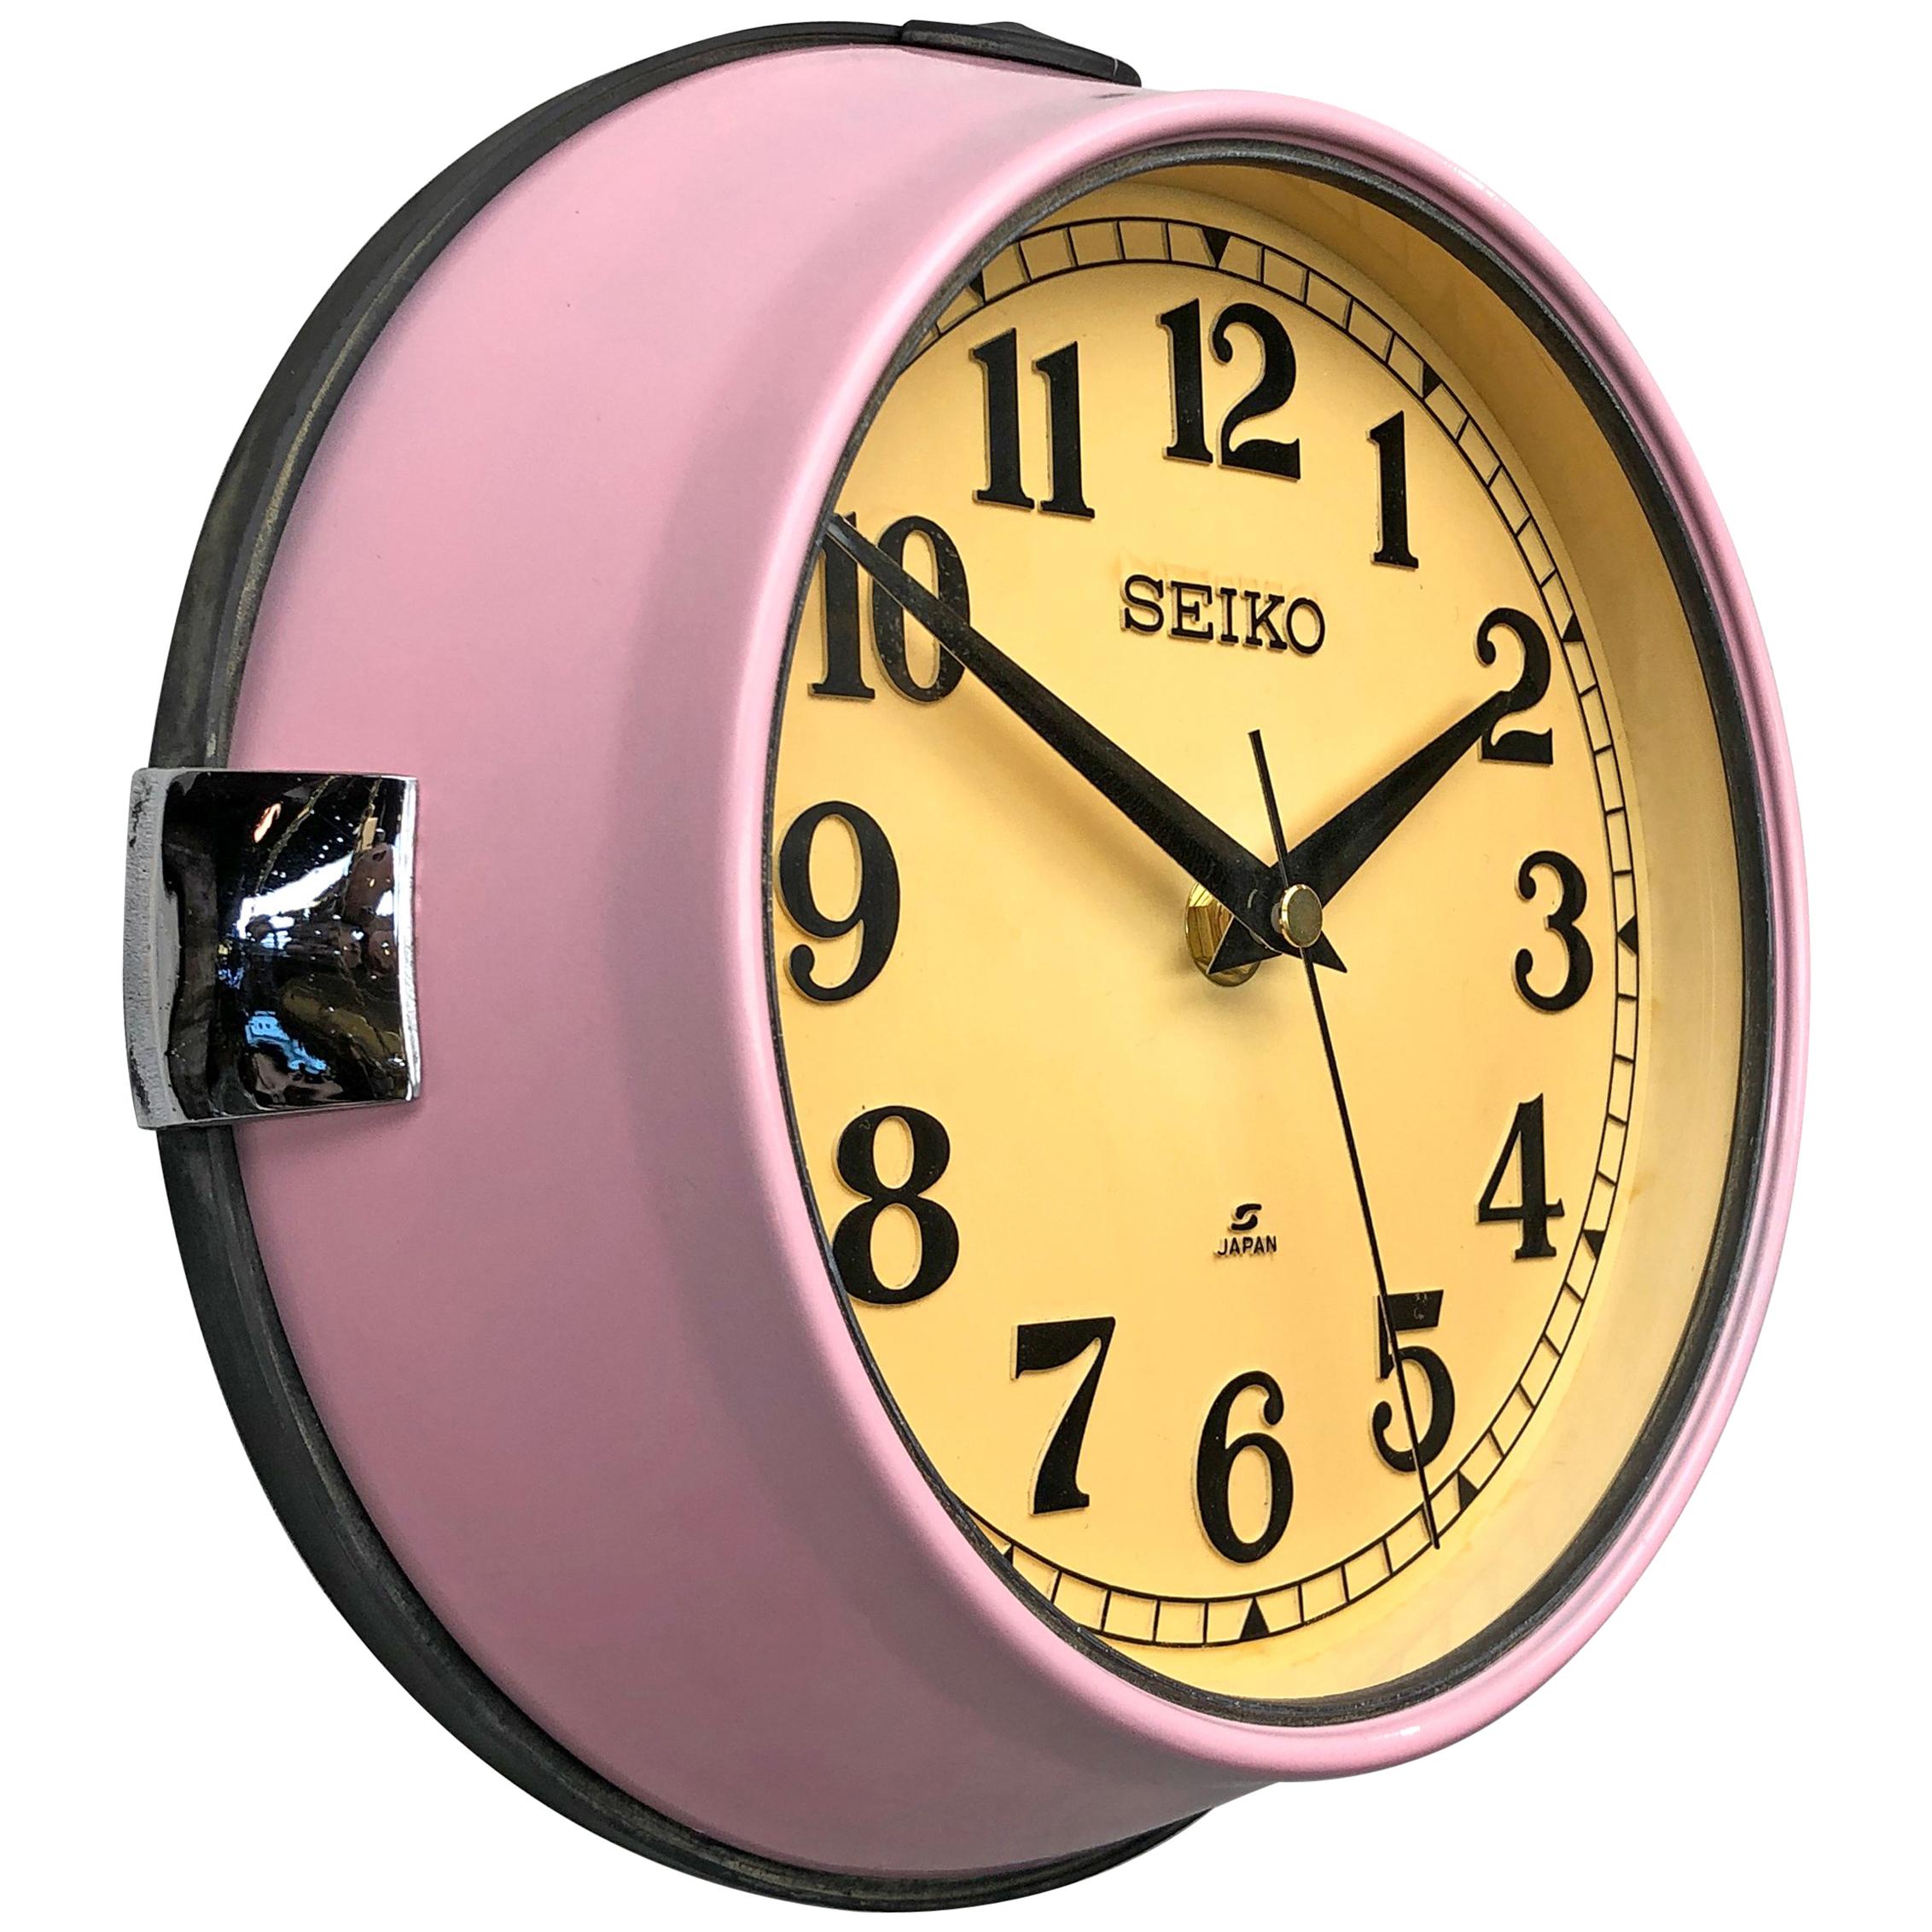 1970s Seiko Retro Vintage Industrial Antique Steel Quartz Wall Clock, Pink